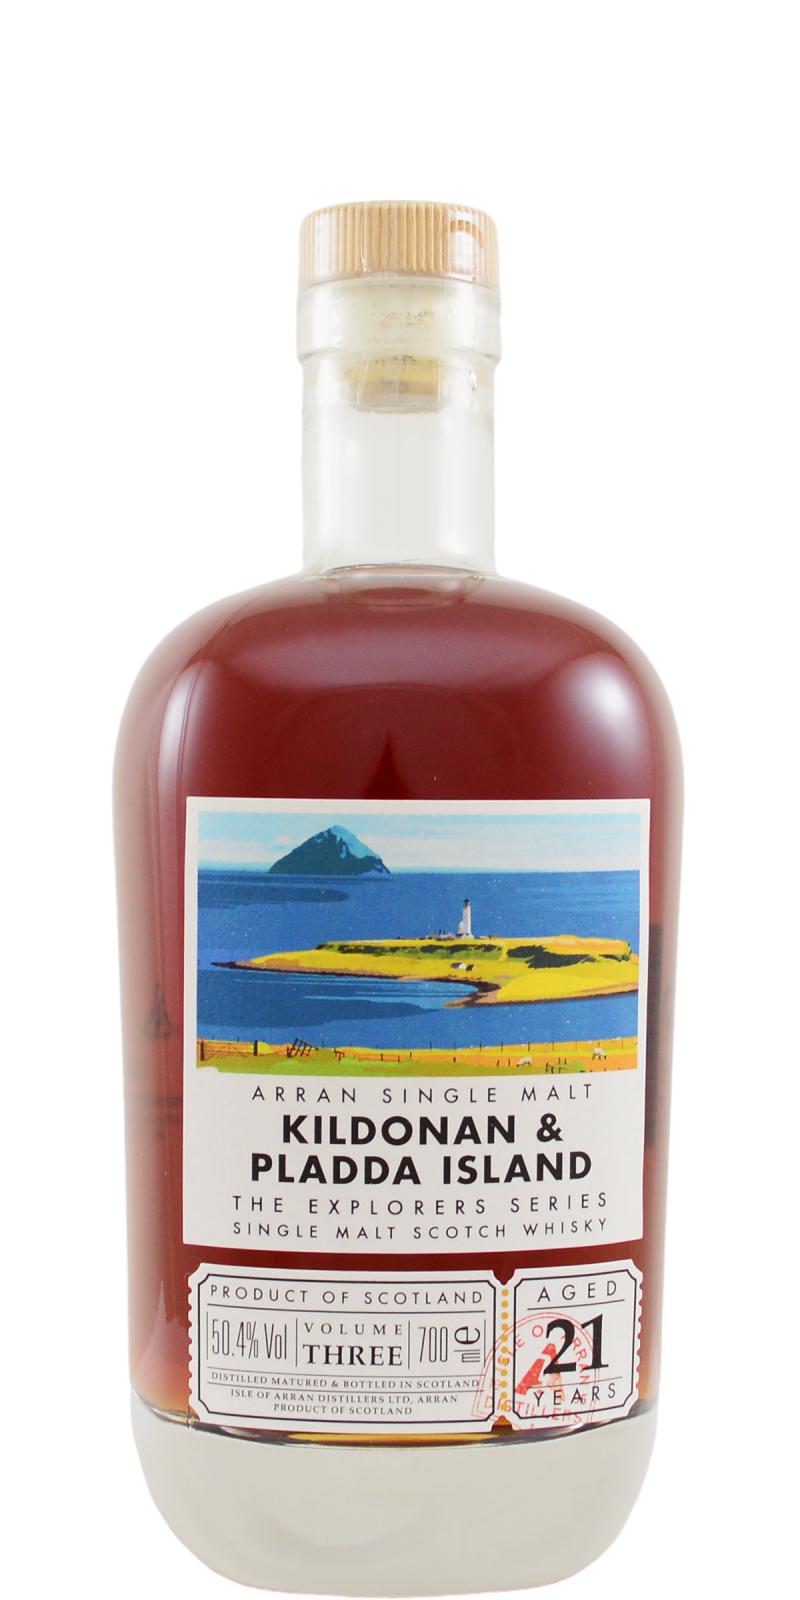 Arran Kildonan & Pladda Island